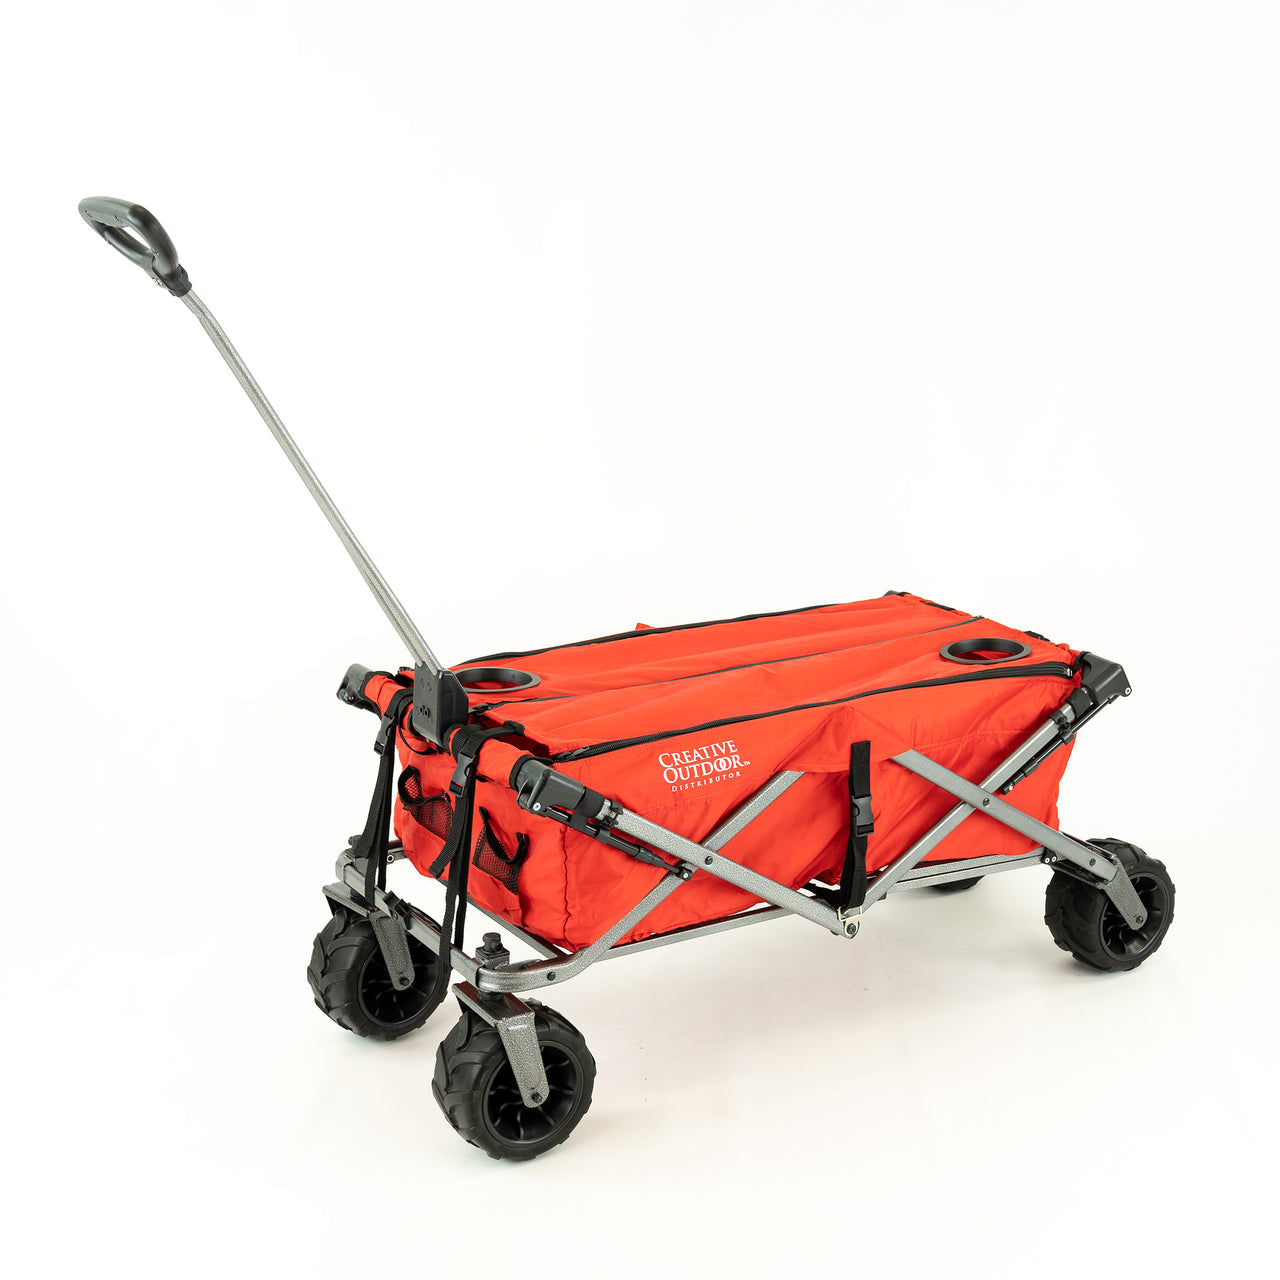 All-Terrain Deluxe Wagon - Red - Custom Folding Wagons